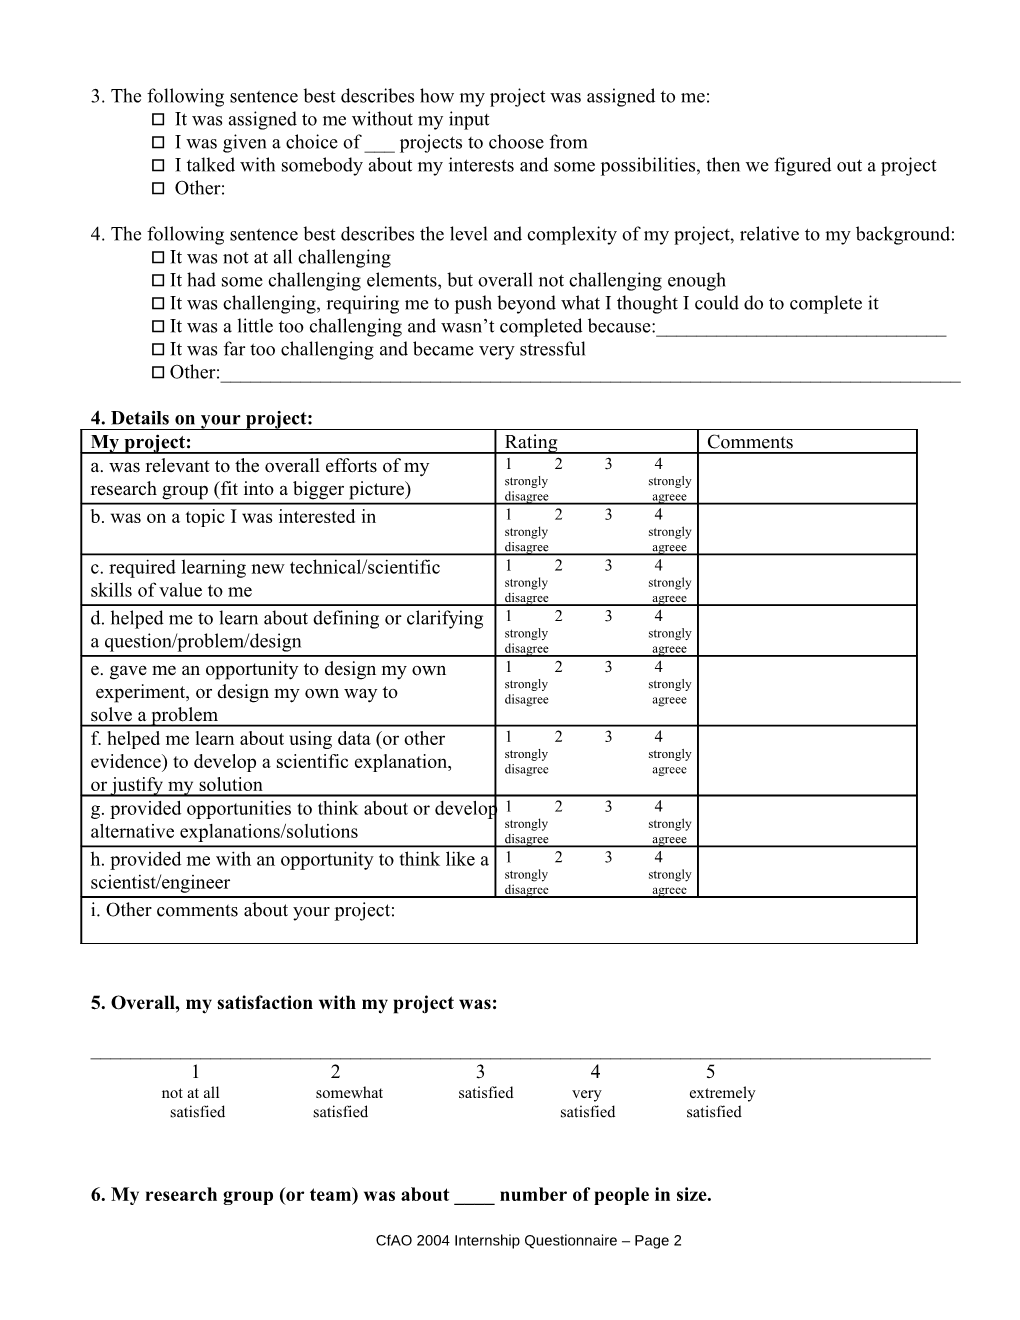 Center for Advanced Optics (Cfao) 2002 Internship Program Student Intern Questionnaire